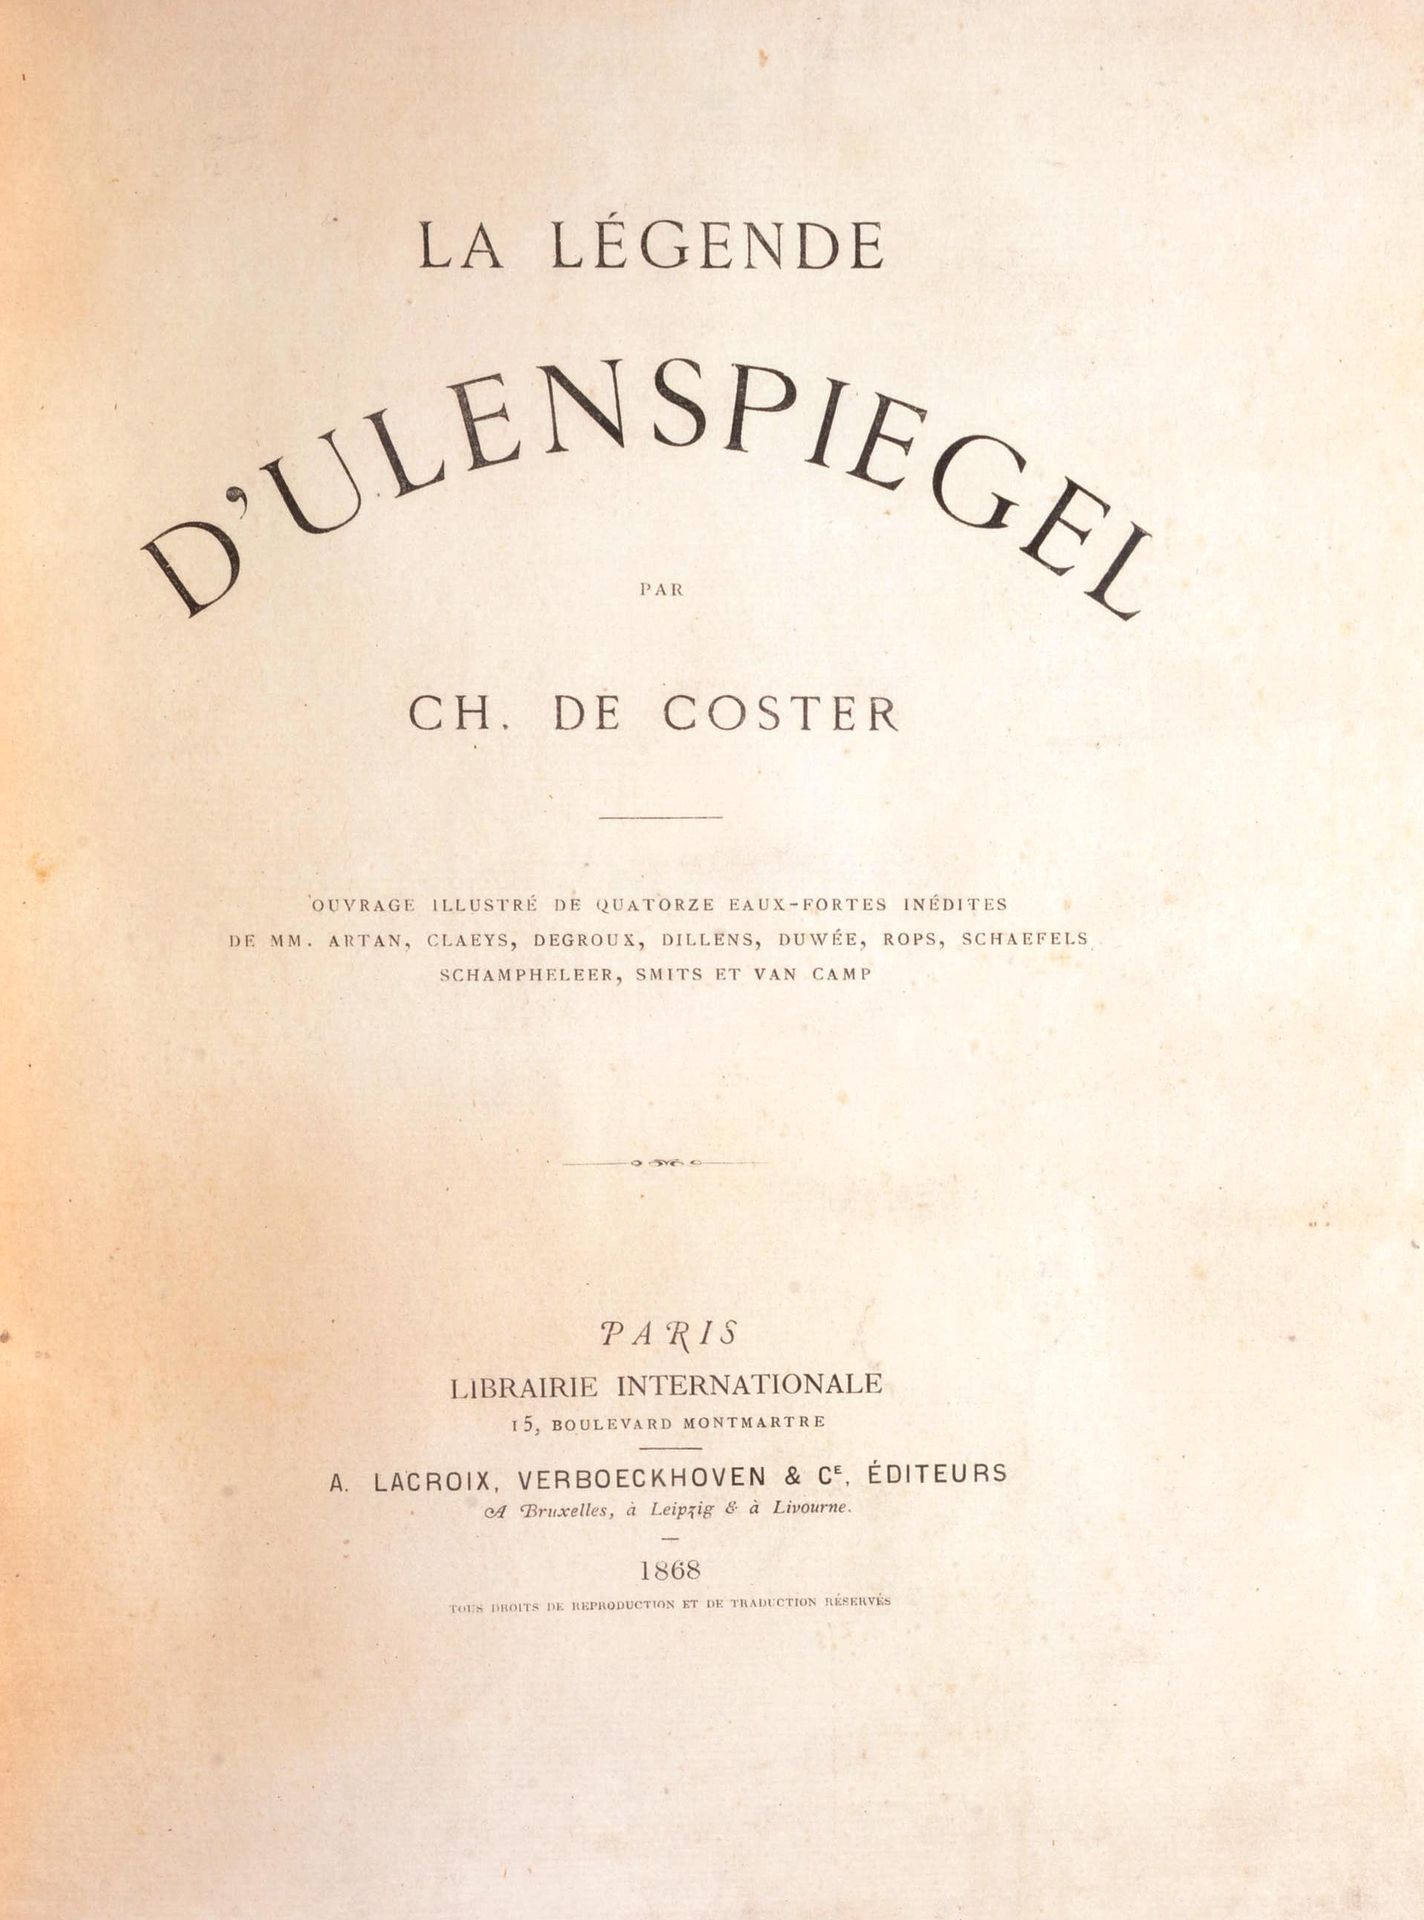 DE COSTER Charles DE COSTER Charles



乌兰斯比格的传说



巴黎-布鲁塞尔，莱比锡，里窝那，Librairie int&hellip;